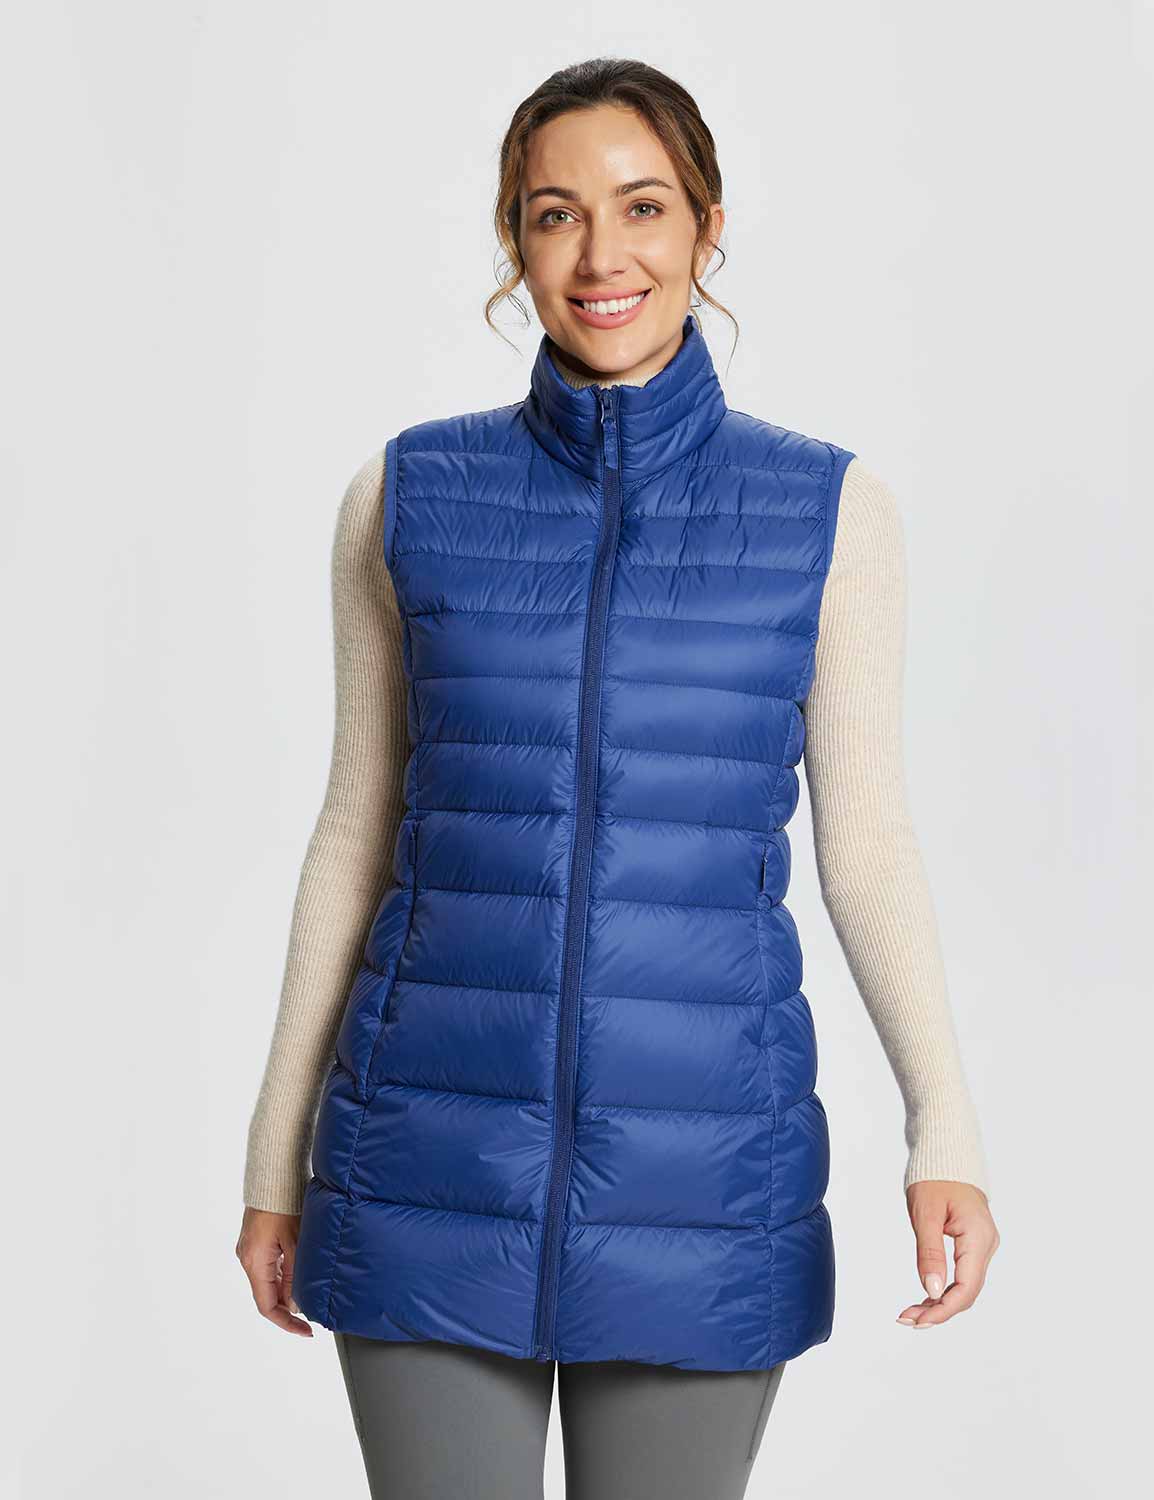 Baleaf Women's Water-Resistant Puffer Sleeveless Jacket dga070 Navy Blue Main